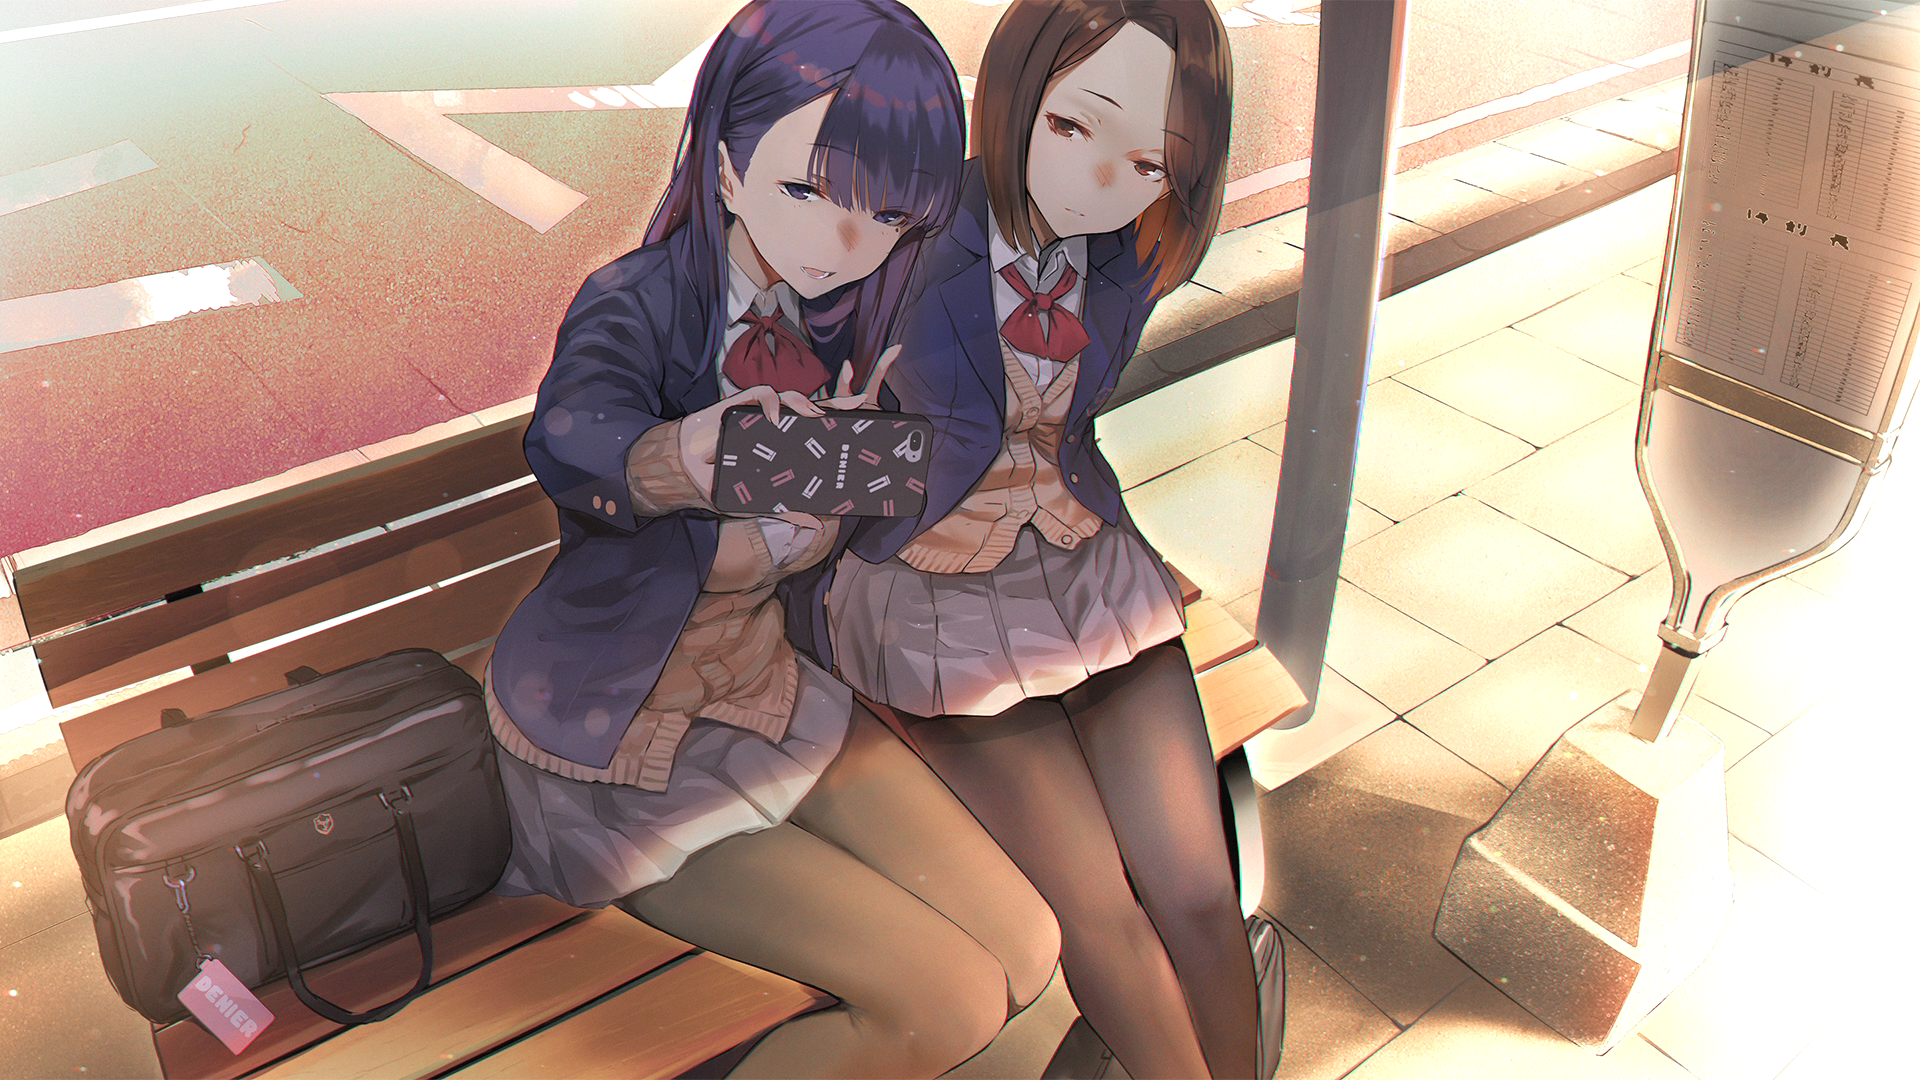 Miru Tights Anime Anime Girls Schoolgirl School Uniform Dark Hair Brunette Blushing Selfies Cellphon 1920x1080